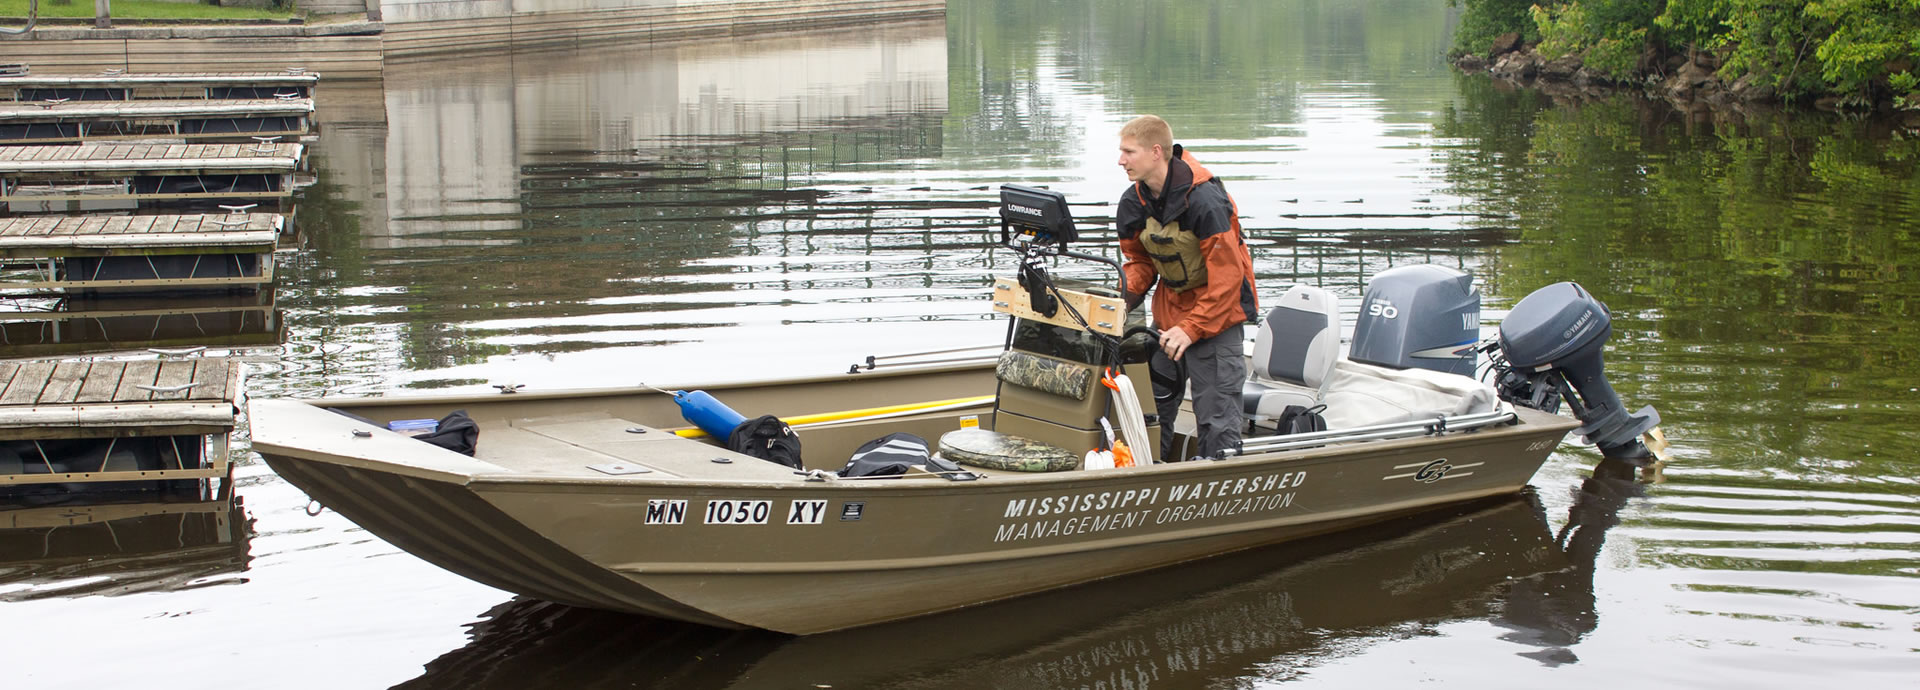 An MWMO monitoring team member docking the MWMO boat.